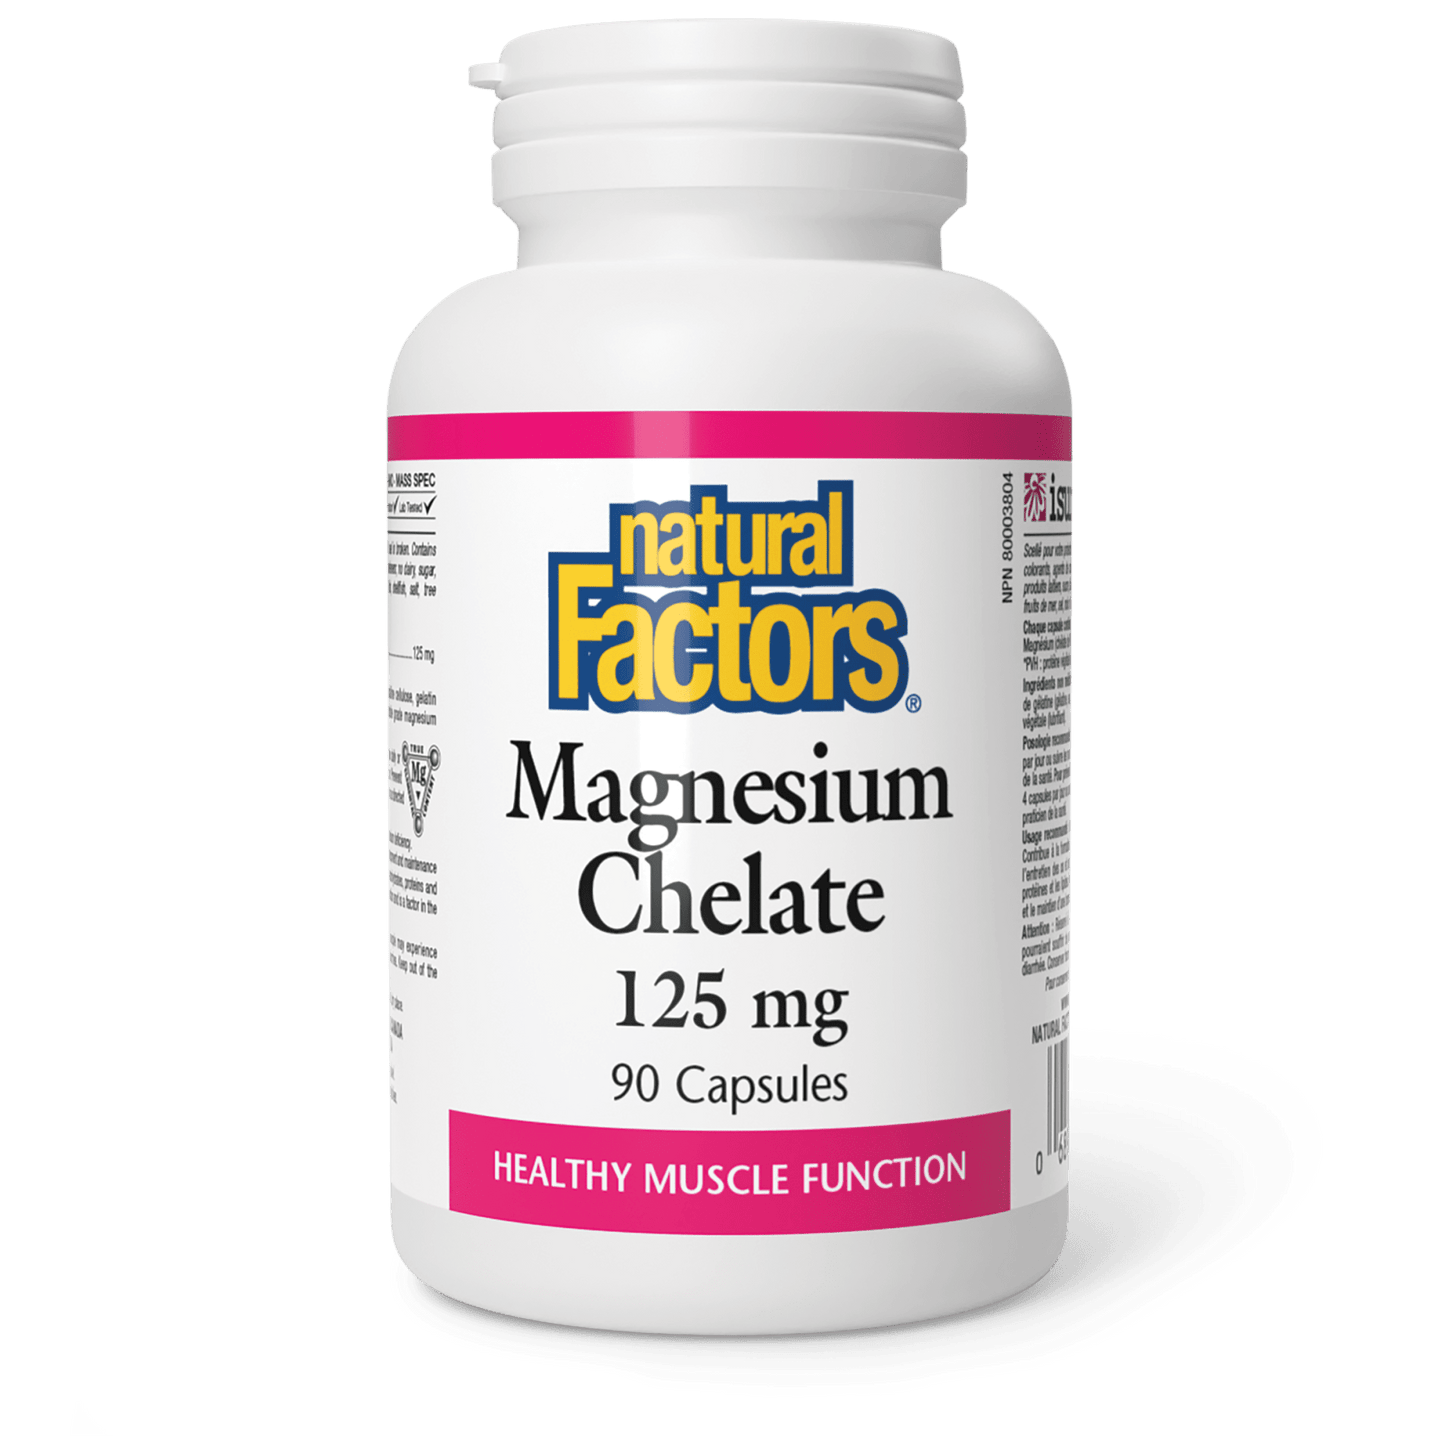 Magnesium Chelate 125 mg, Natural Factors|v|image|1651